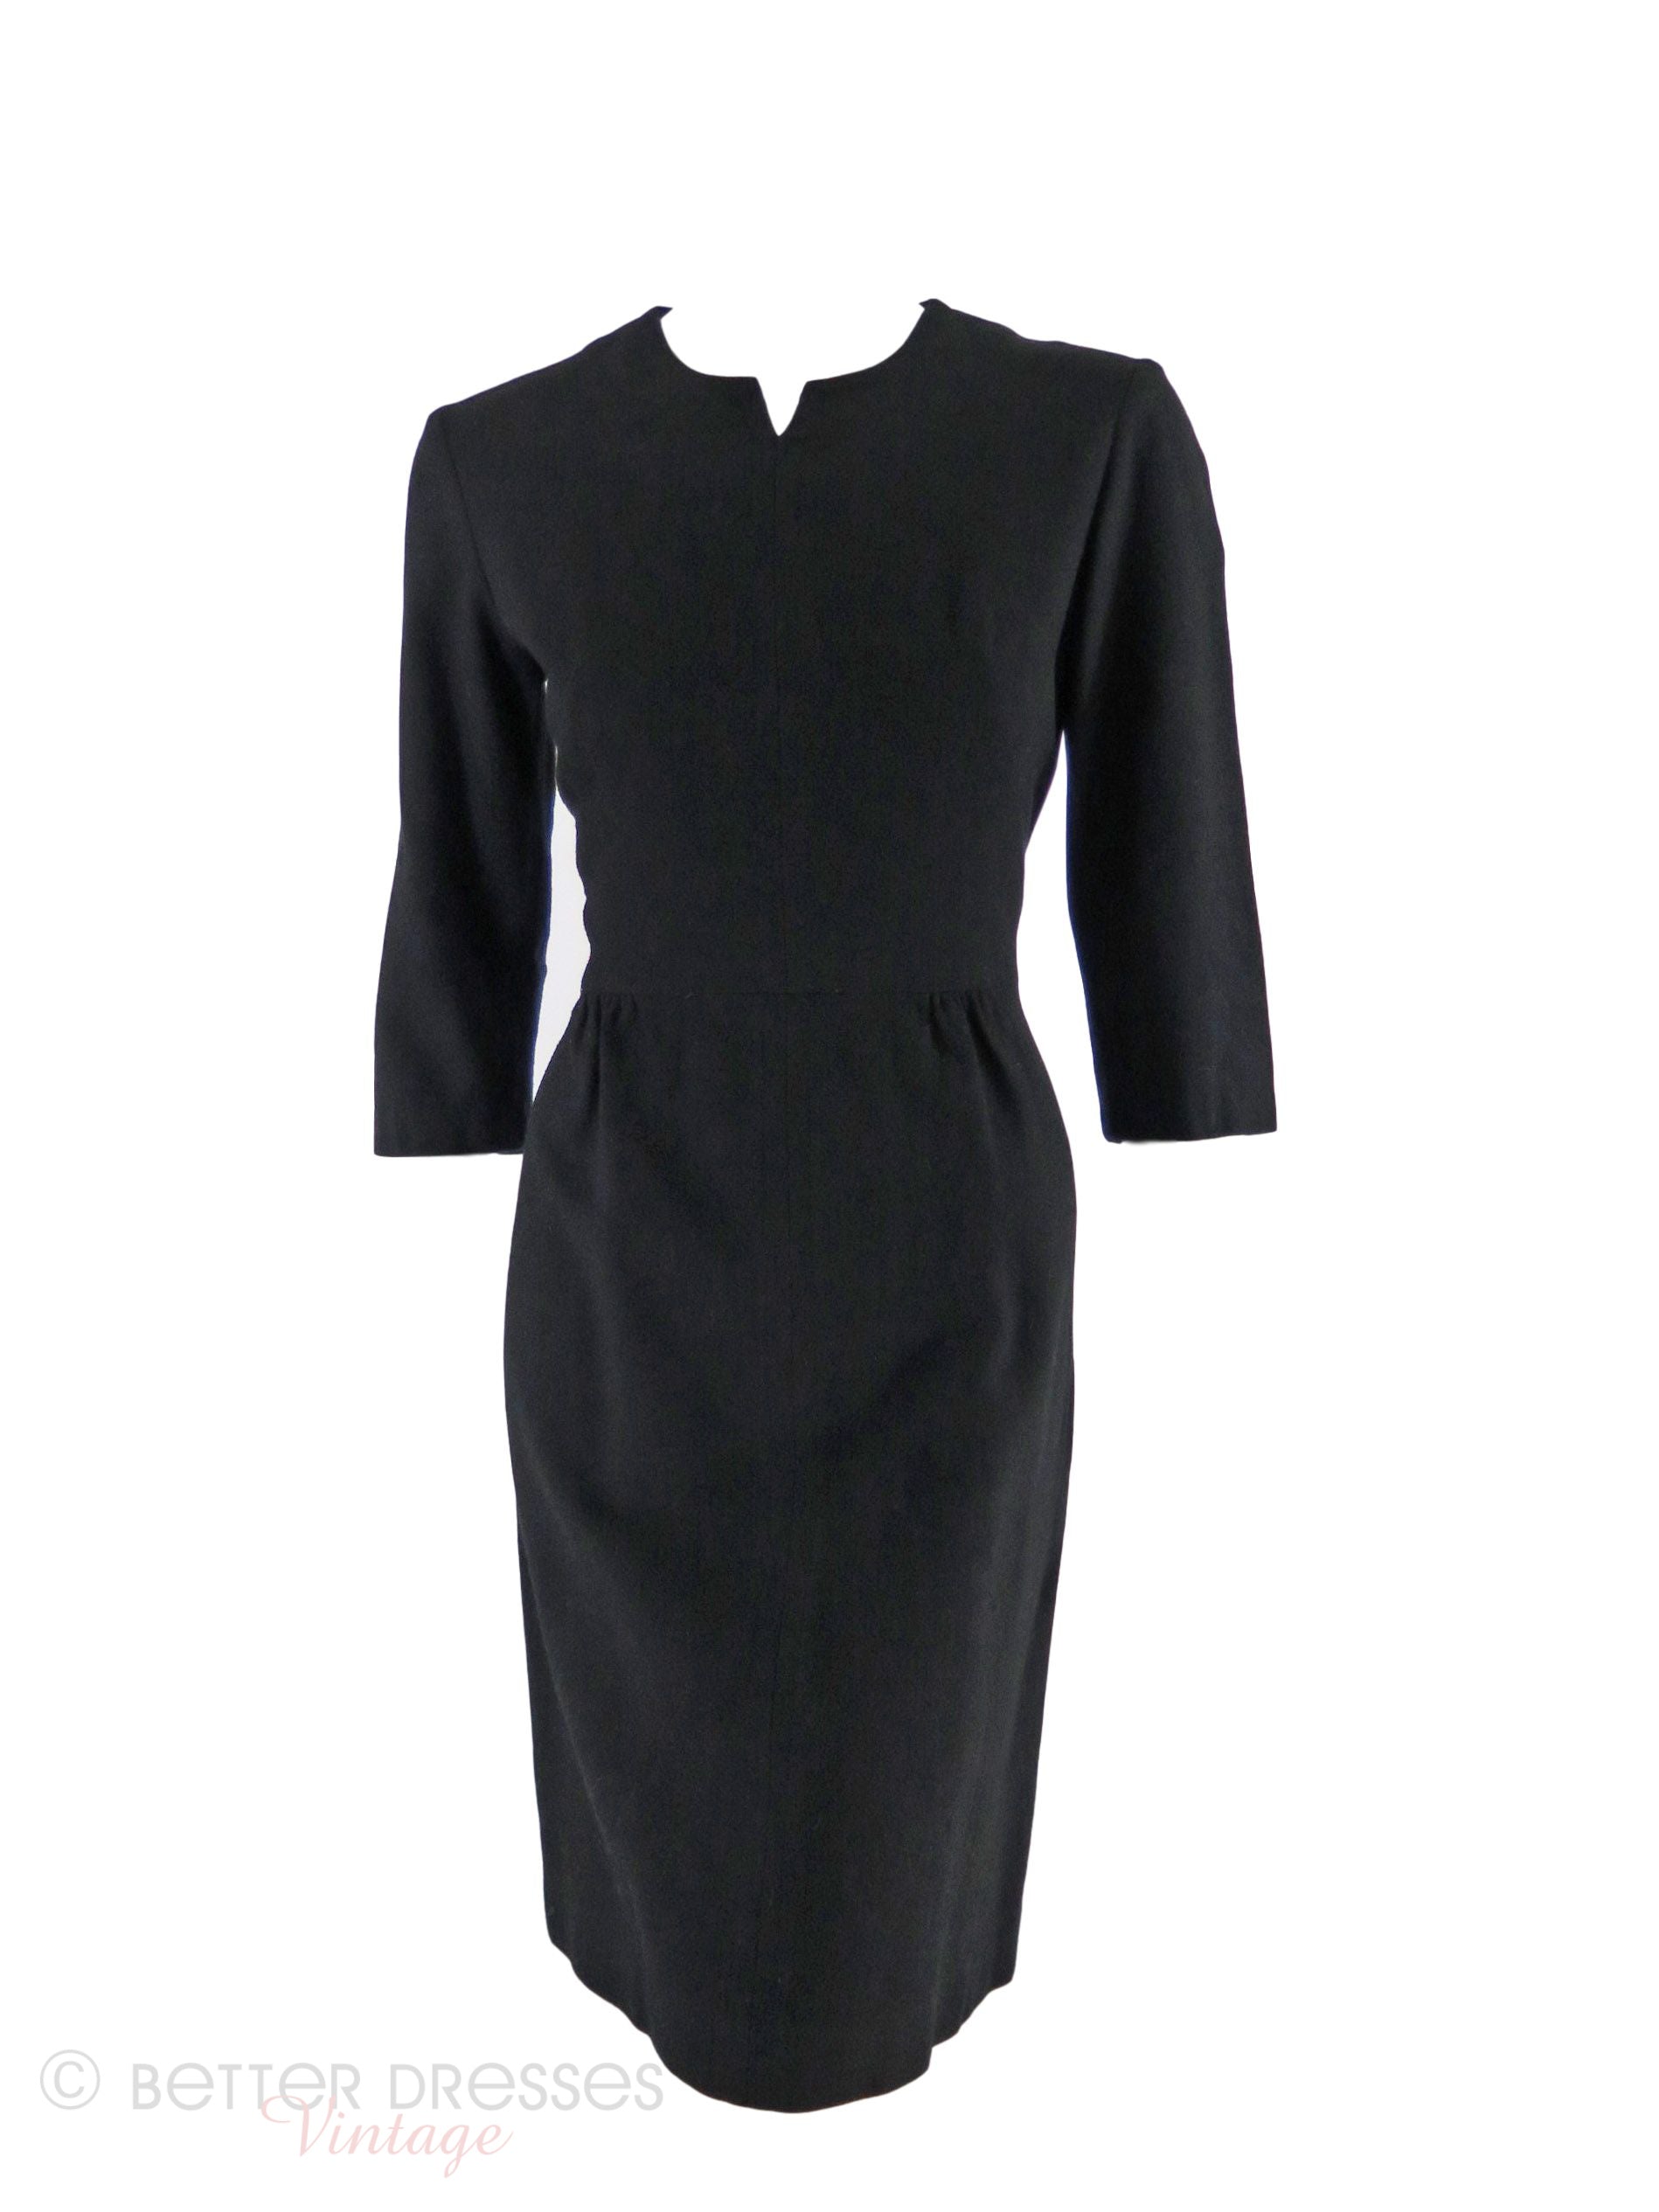 60s sheath dress